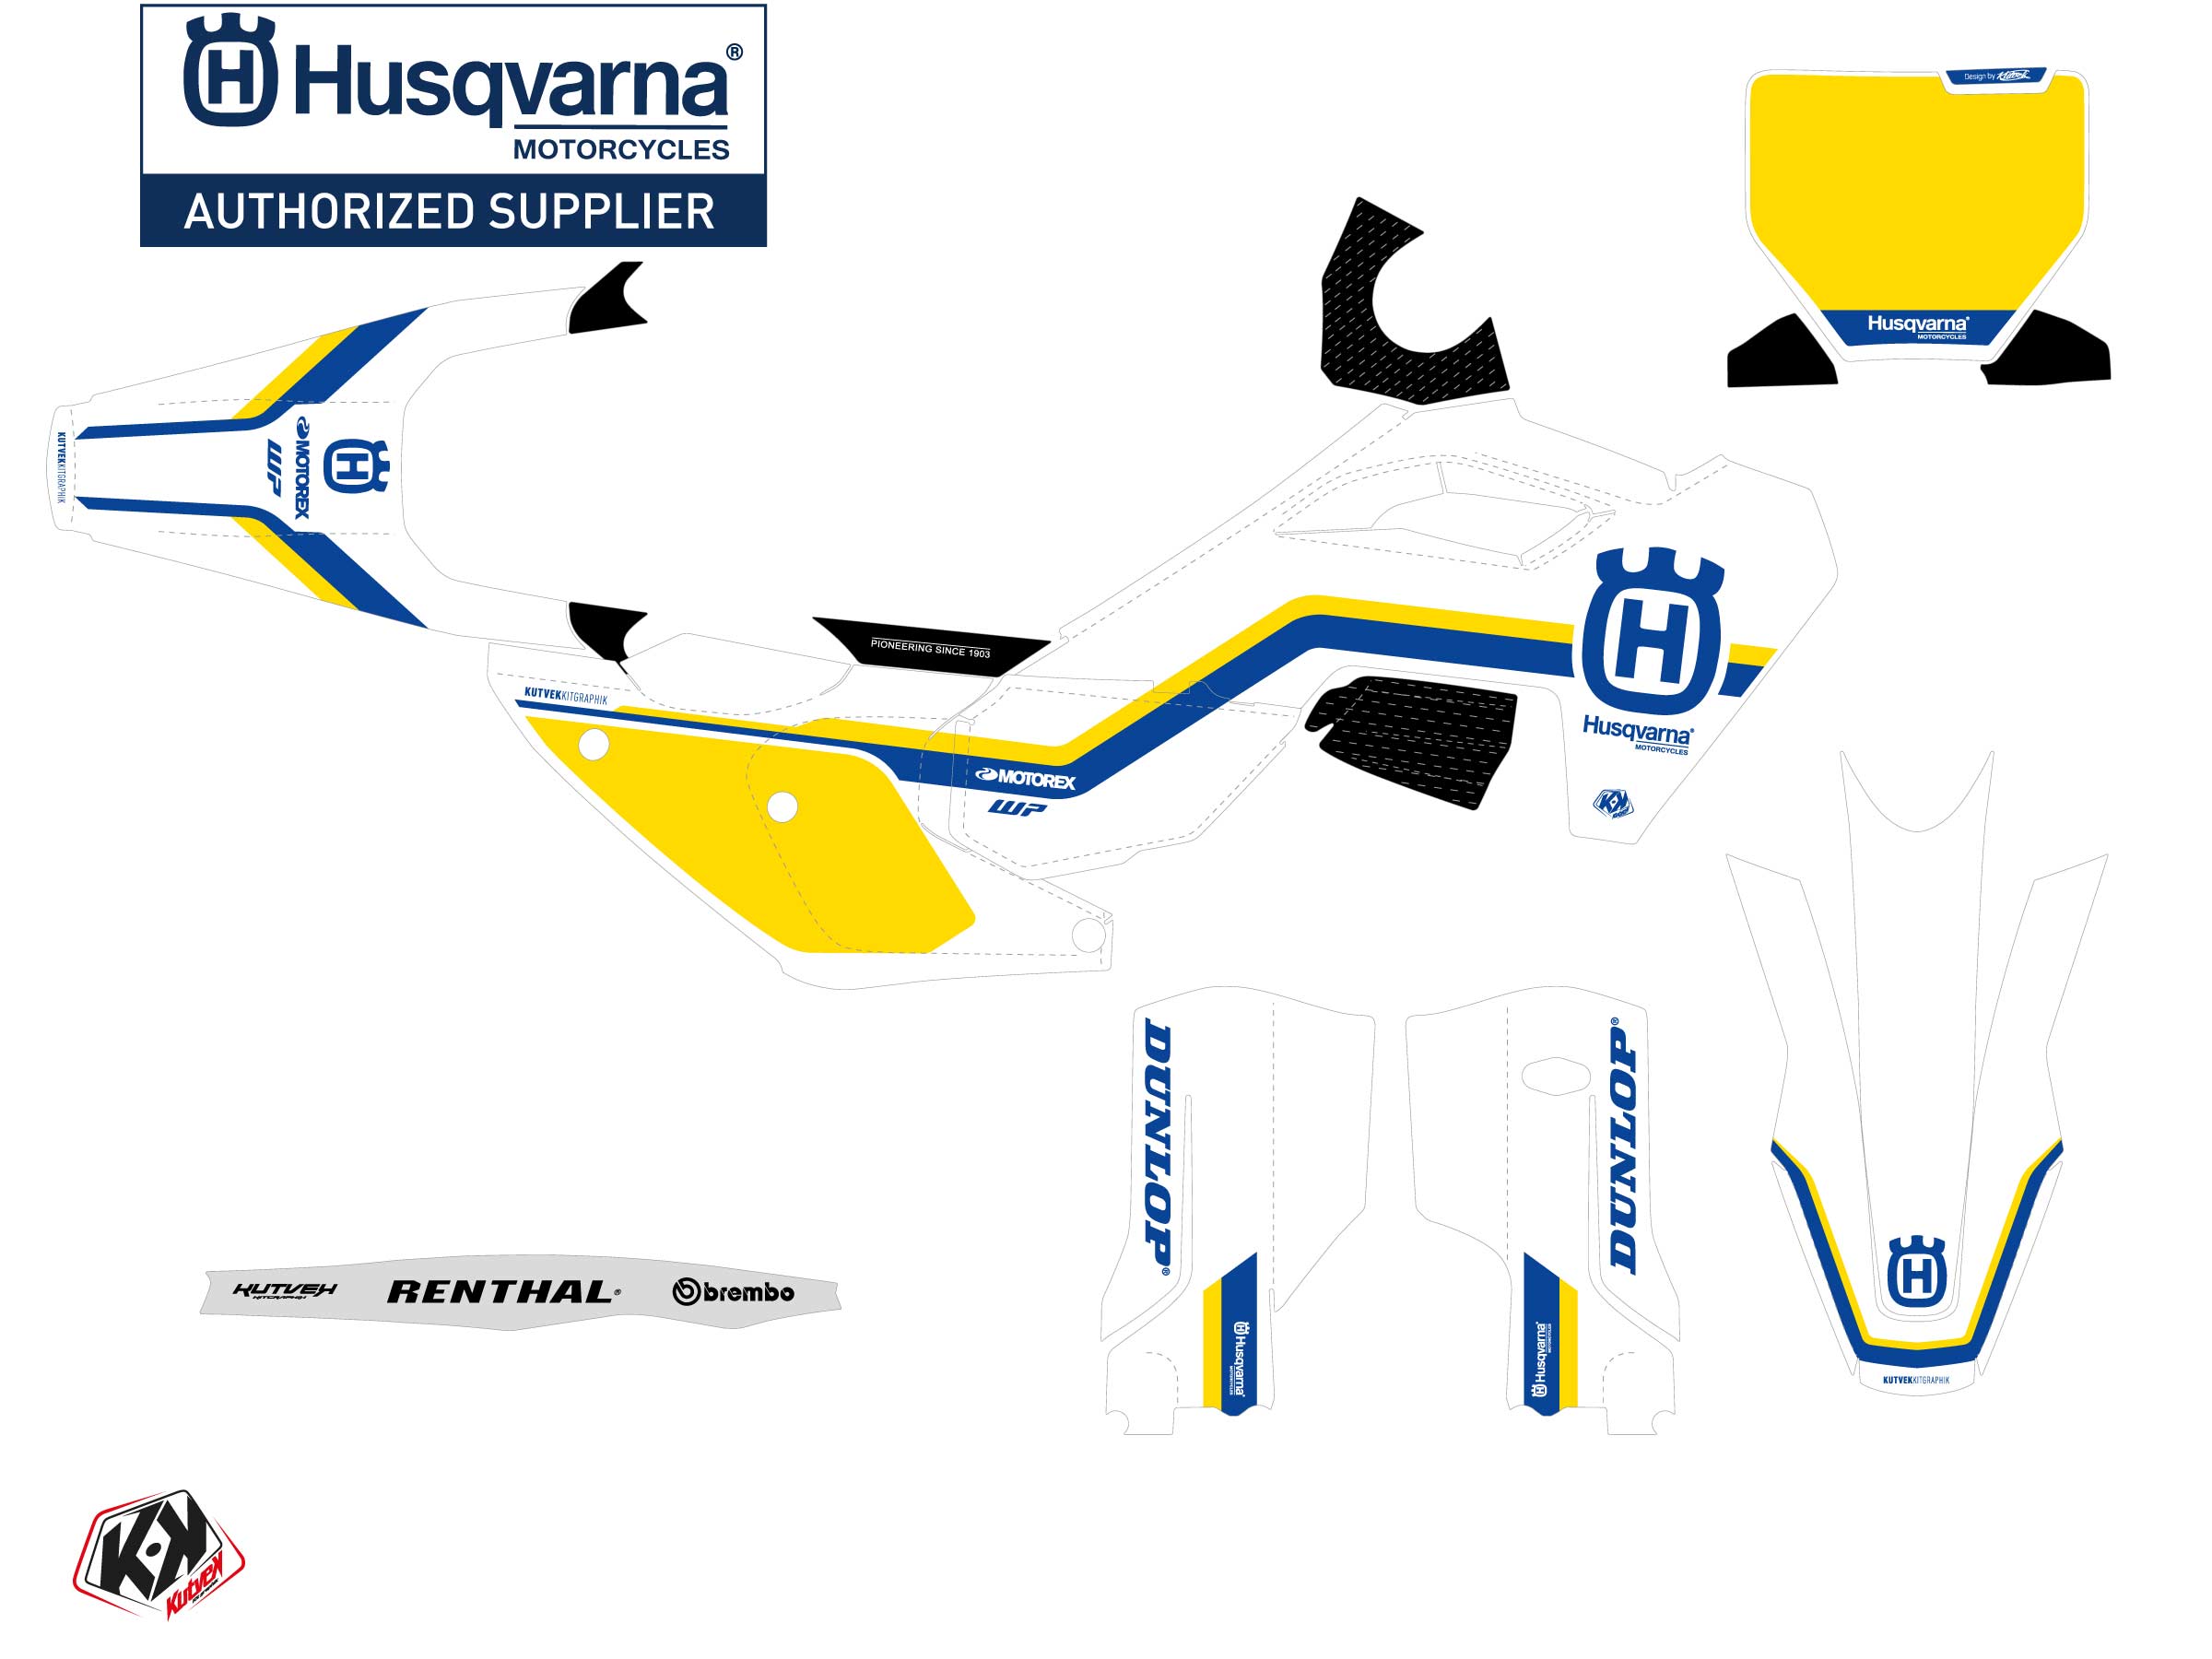 Husqvarna Fc 250 Dirt Bike Heritage K23 Graphic Kit